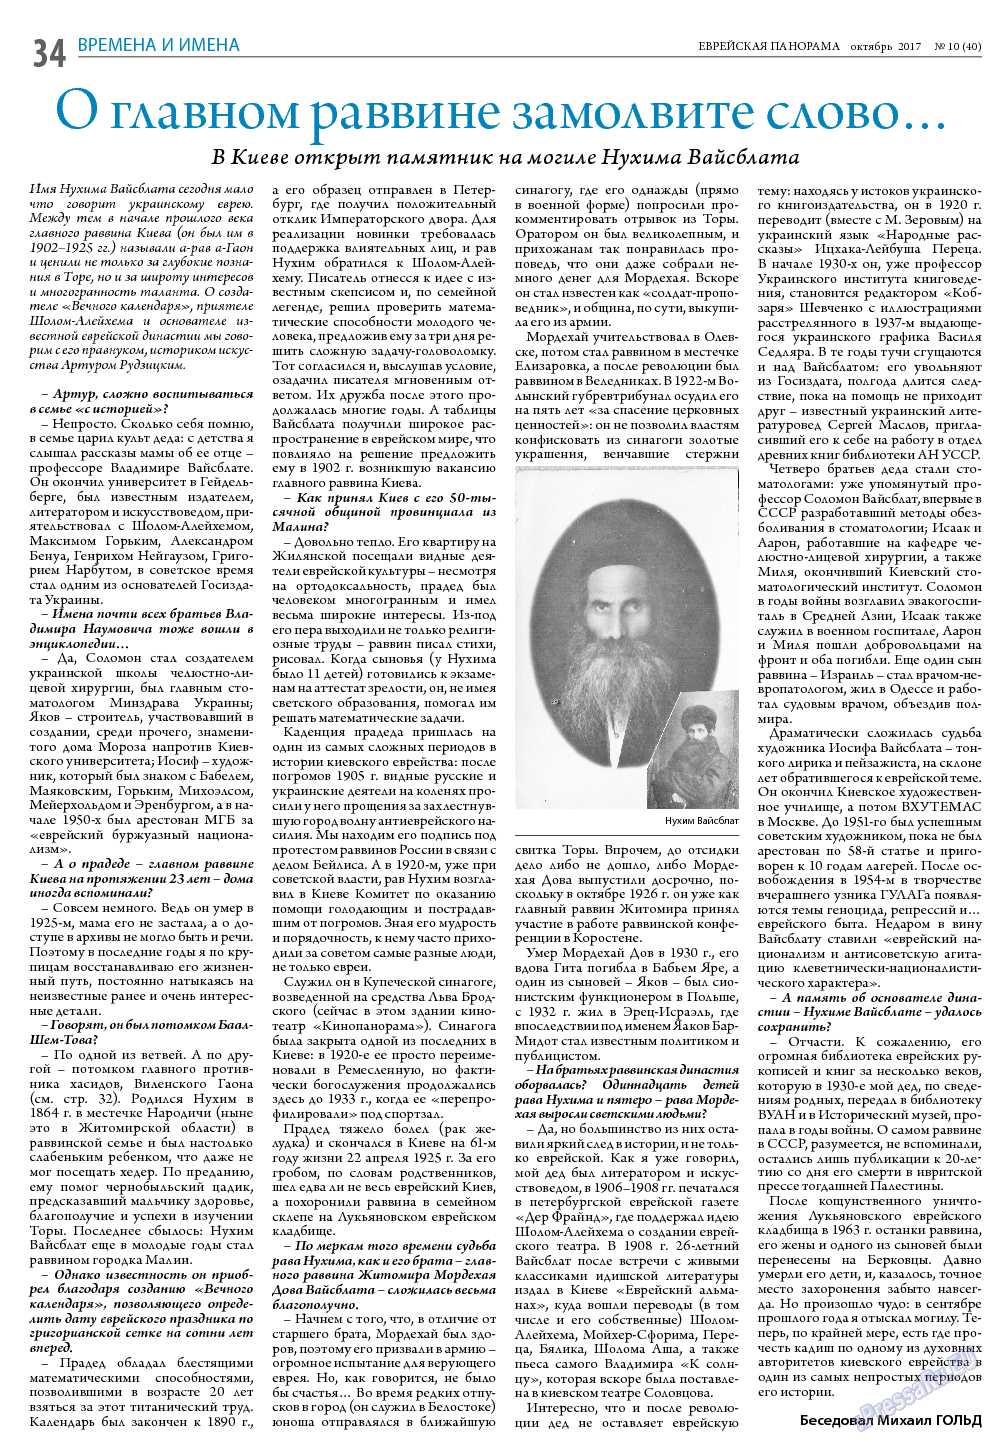 Еврейская панорама, газета. 2017 №10 стр.34